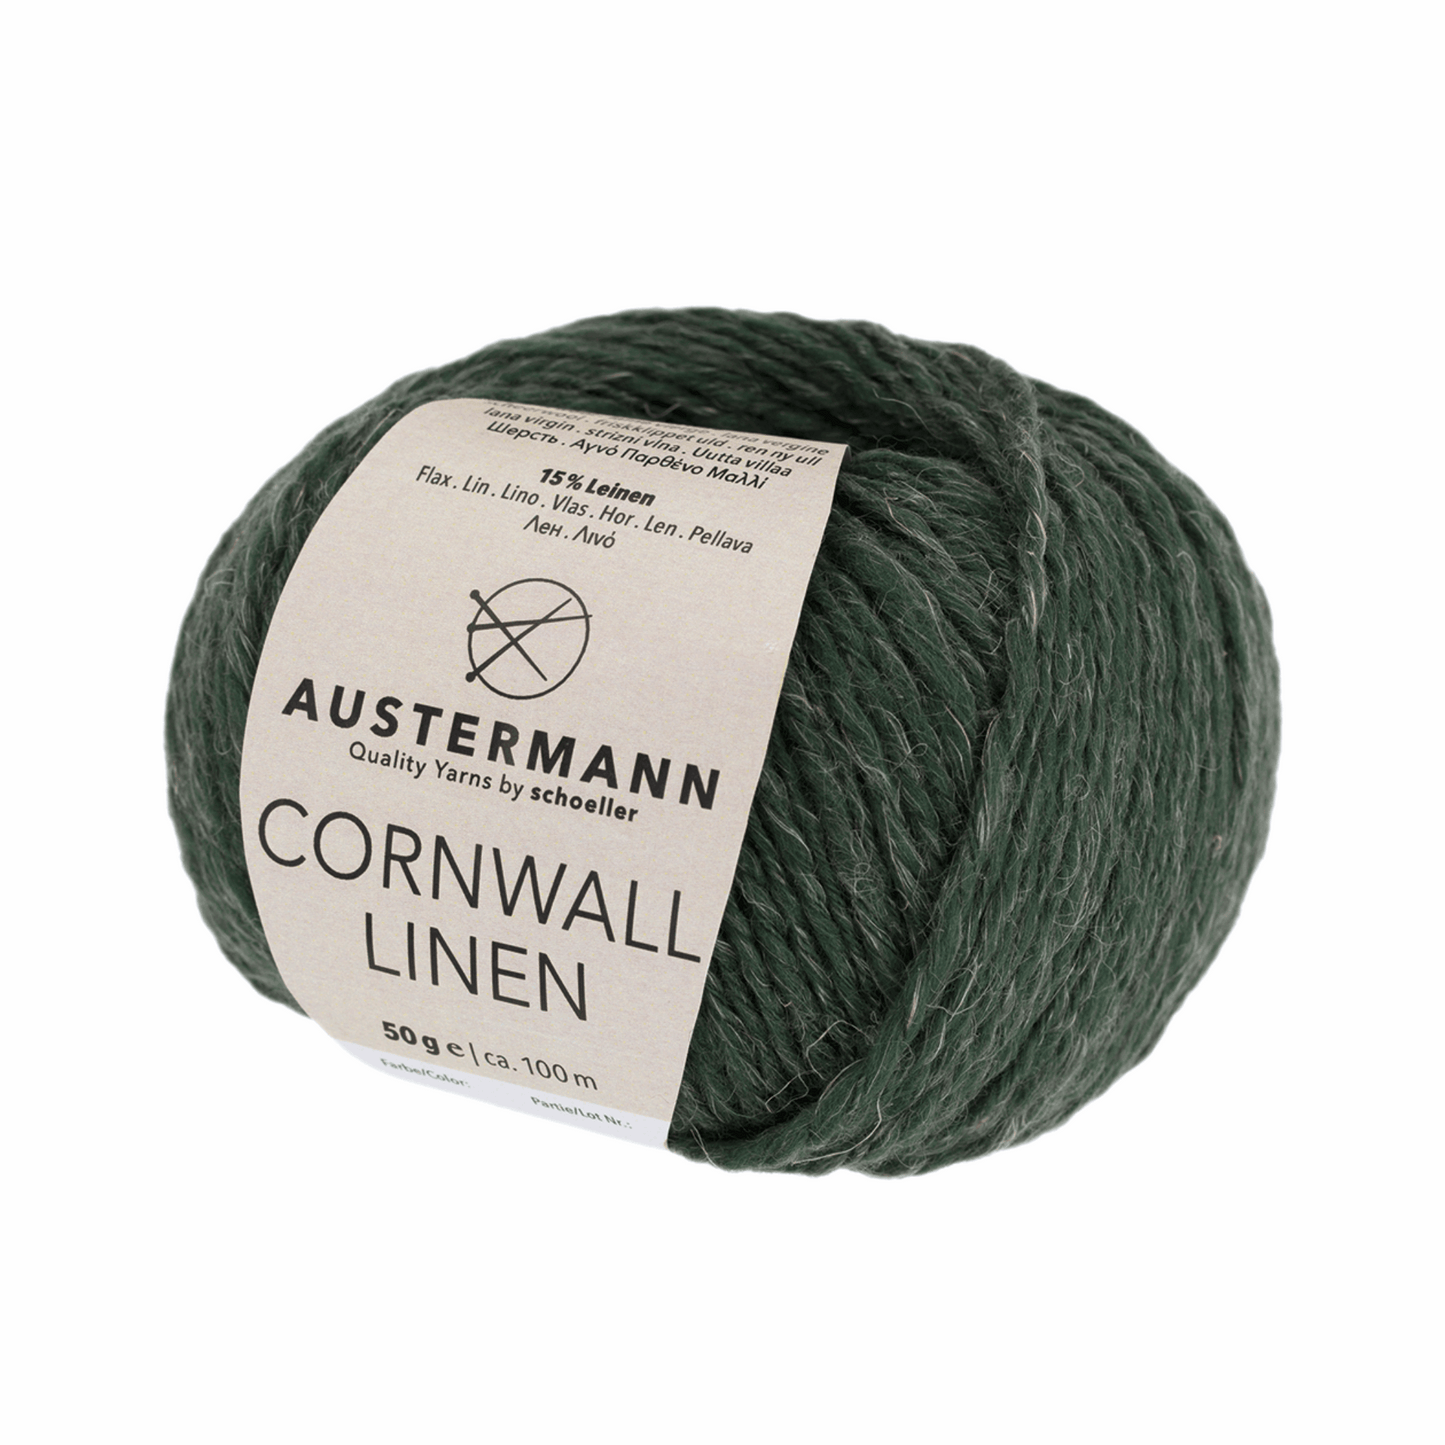 Cornwall Linen 50g, 90342, Farbe 8, tanne